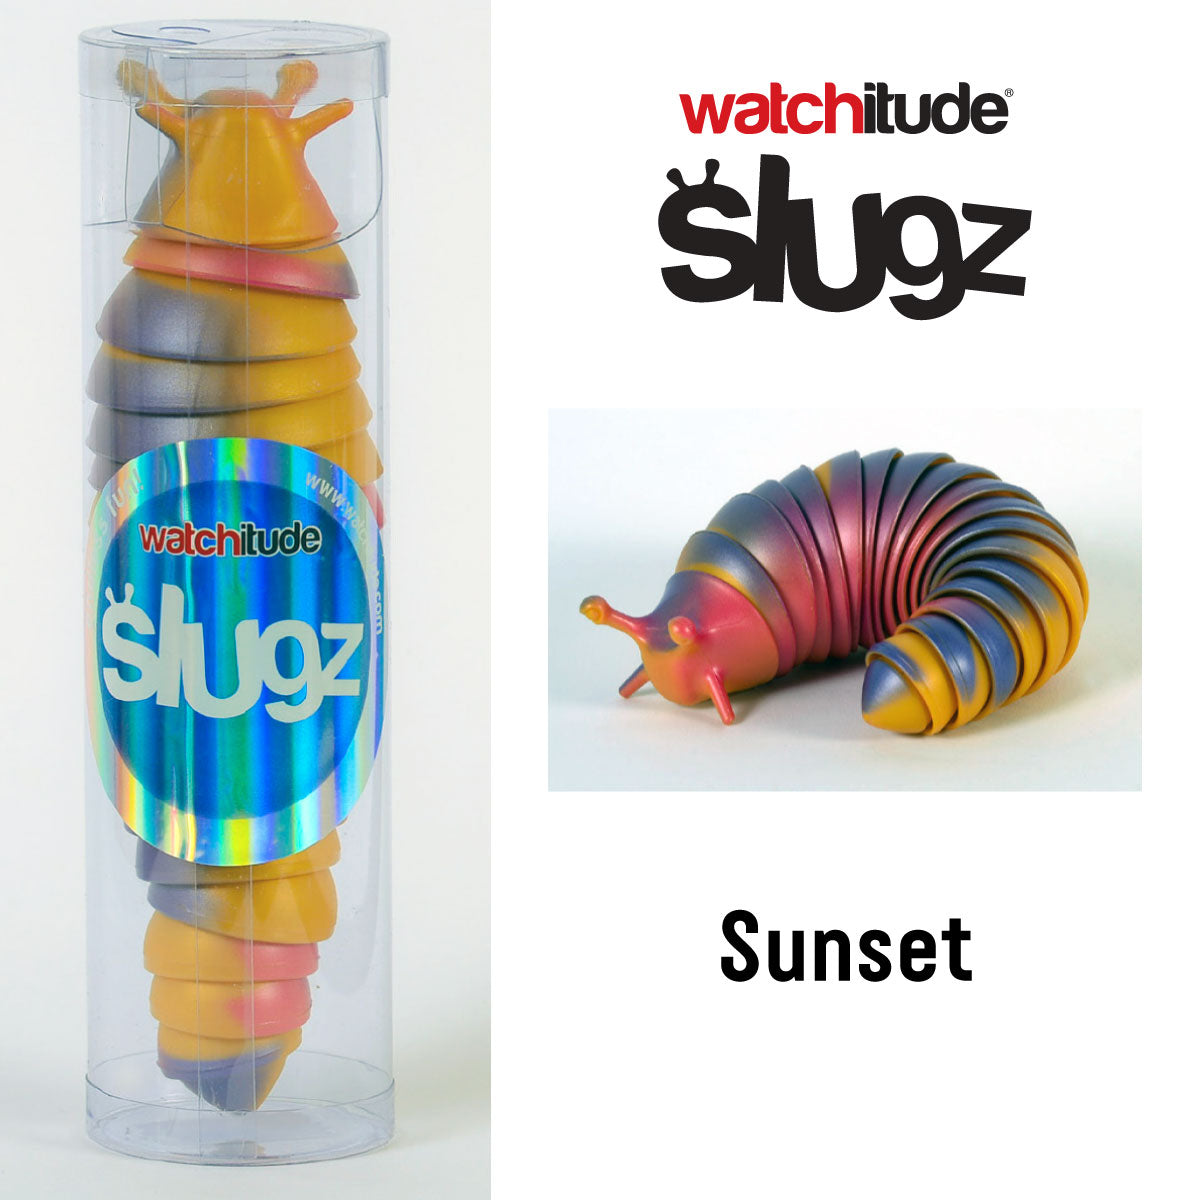 Watchitude Slugz Sunset - 7.7” long